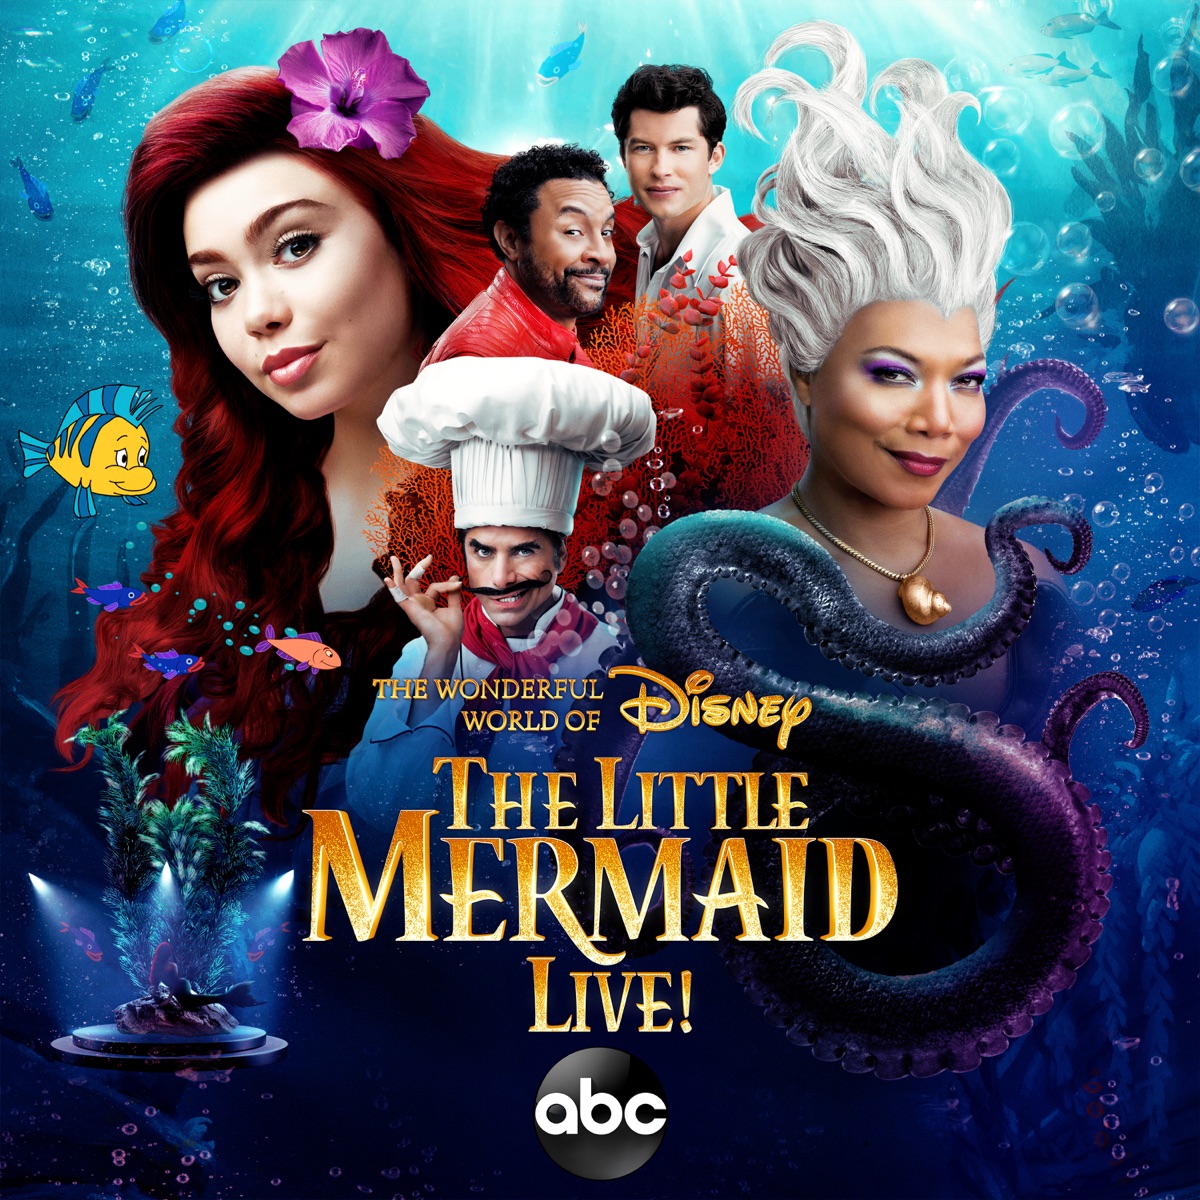 the little mermaid broadway musical dvd